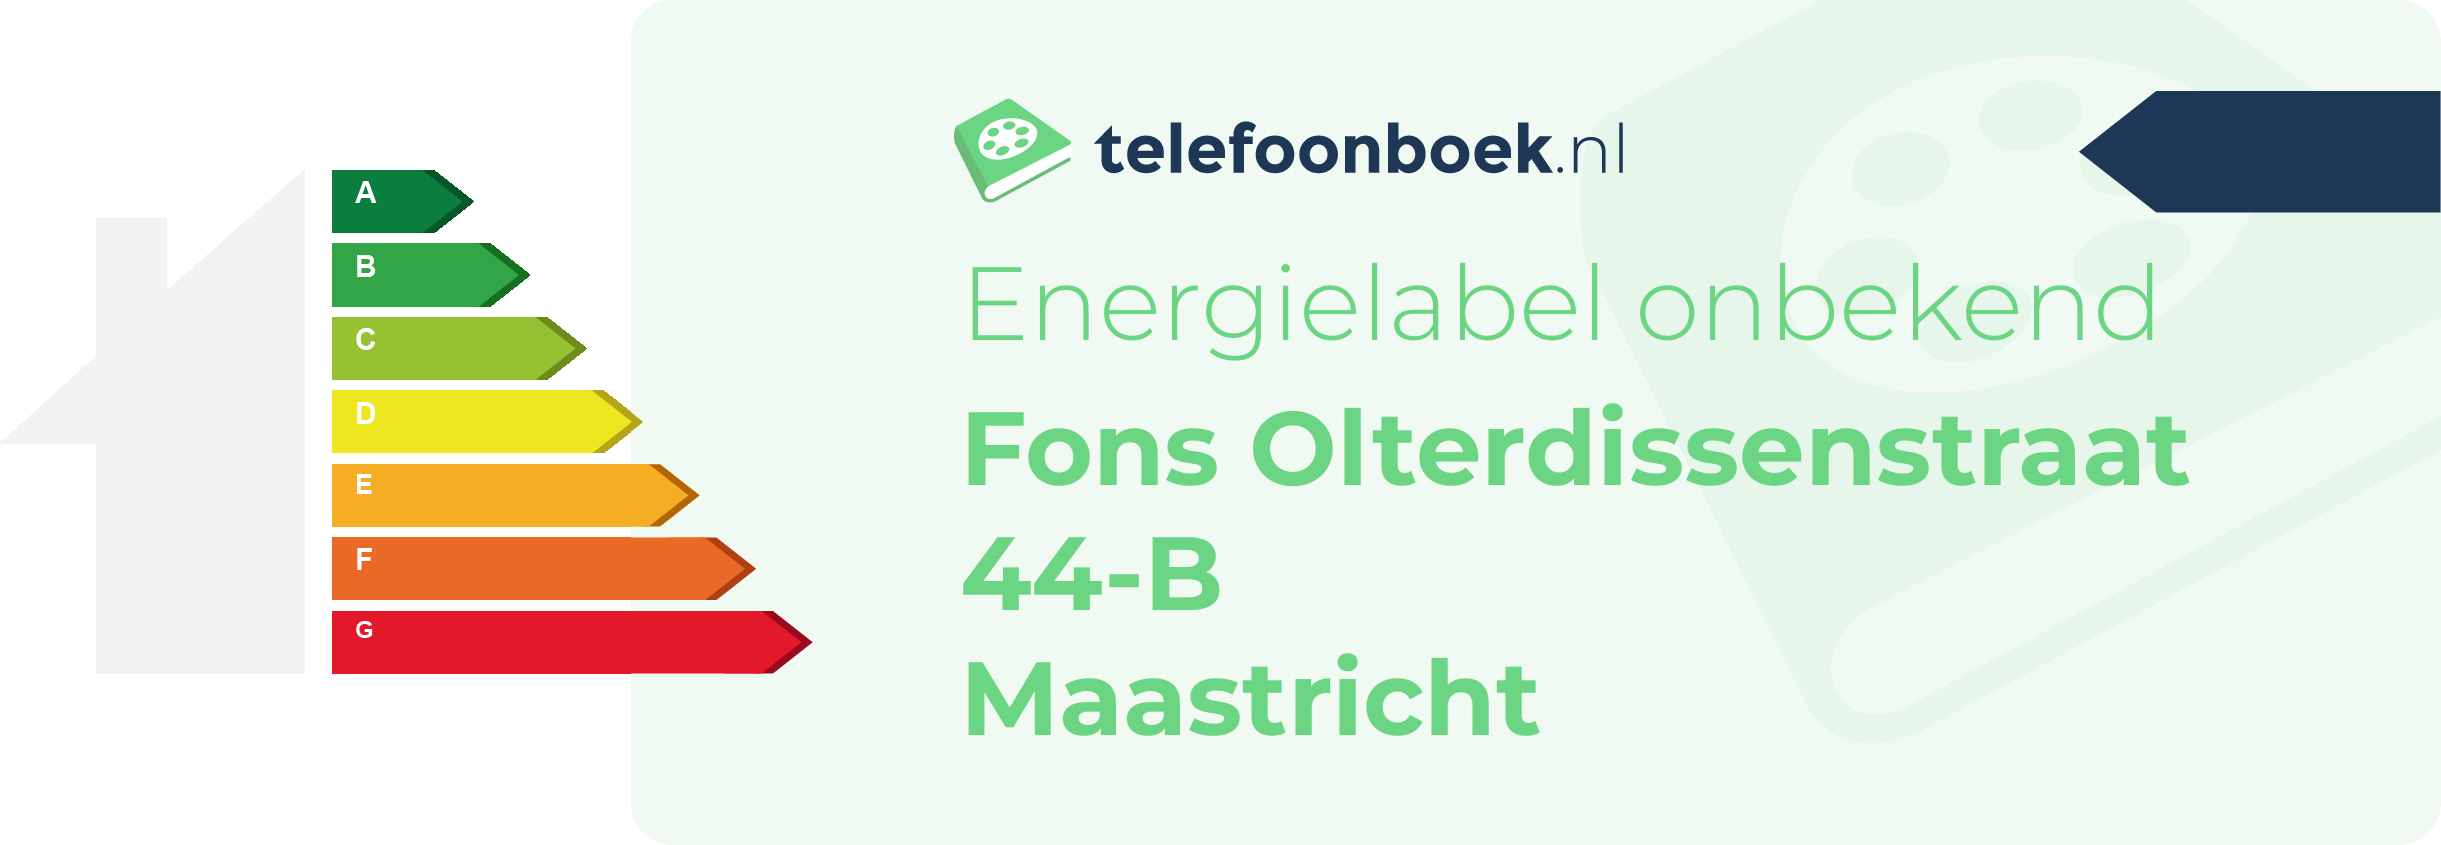 Energielabel Fons Olterdissenstraat 44-B Maastricht